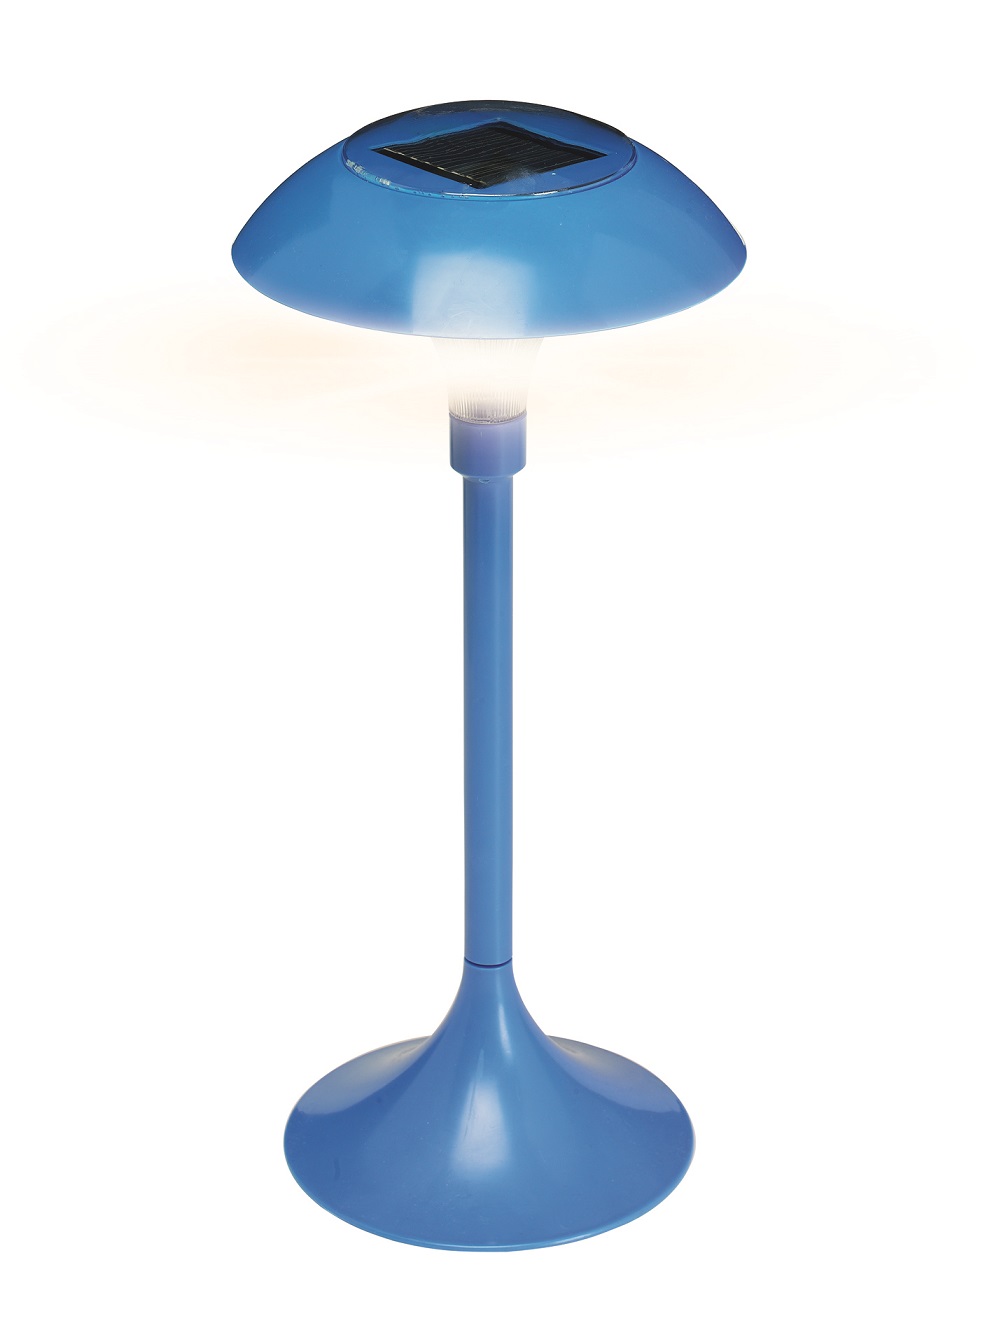 TABLE LAMP SOLAR 3LED 32.5CC